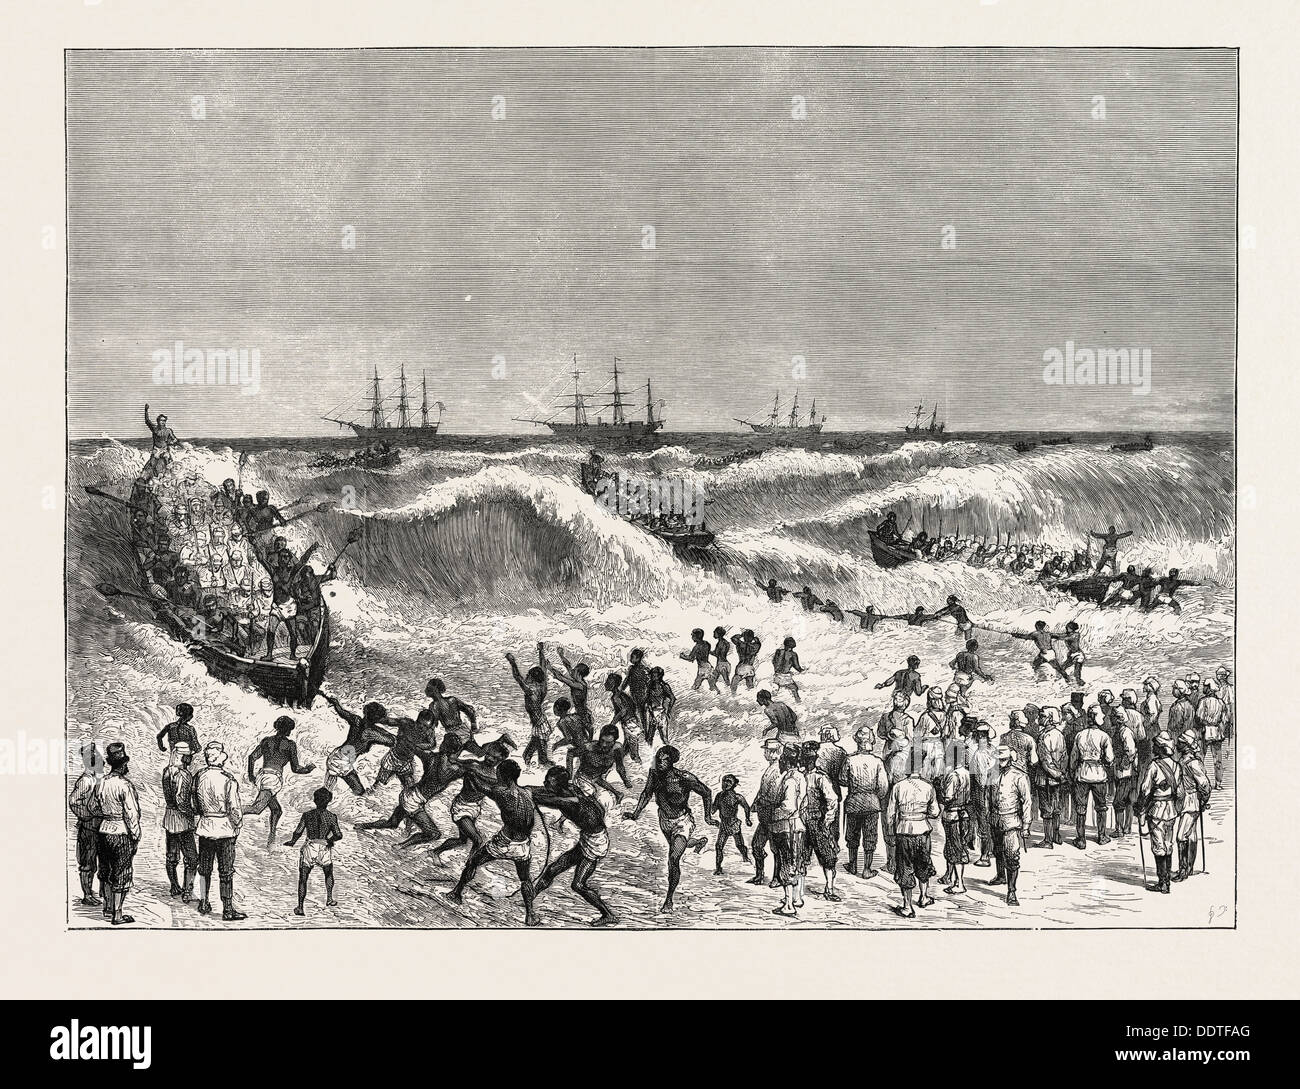 THE ASHANTEE WAR: LANDING TROOPS ON THE GOLD COAST, ANGLO ASHANTI WAR, GHANA, 1873 engraving Stock Photo